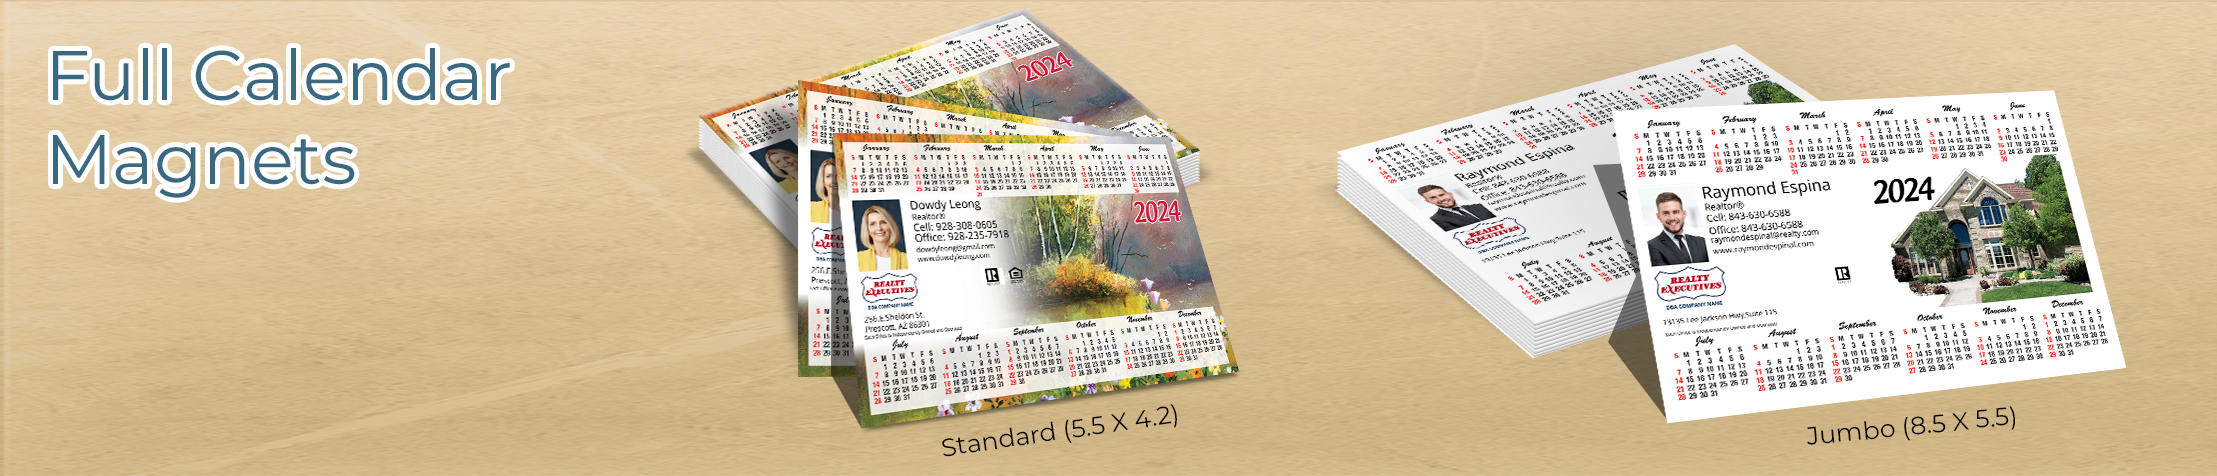 Realty Executives Real Estate Full Calendar Magnets - Realty Executives  2019 calendars in Standard or Jumbo Size | BestPrintBuy.com